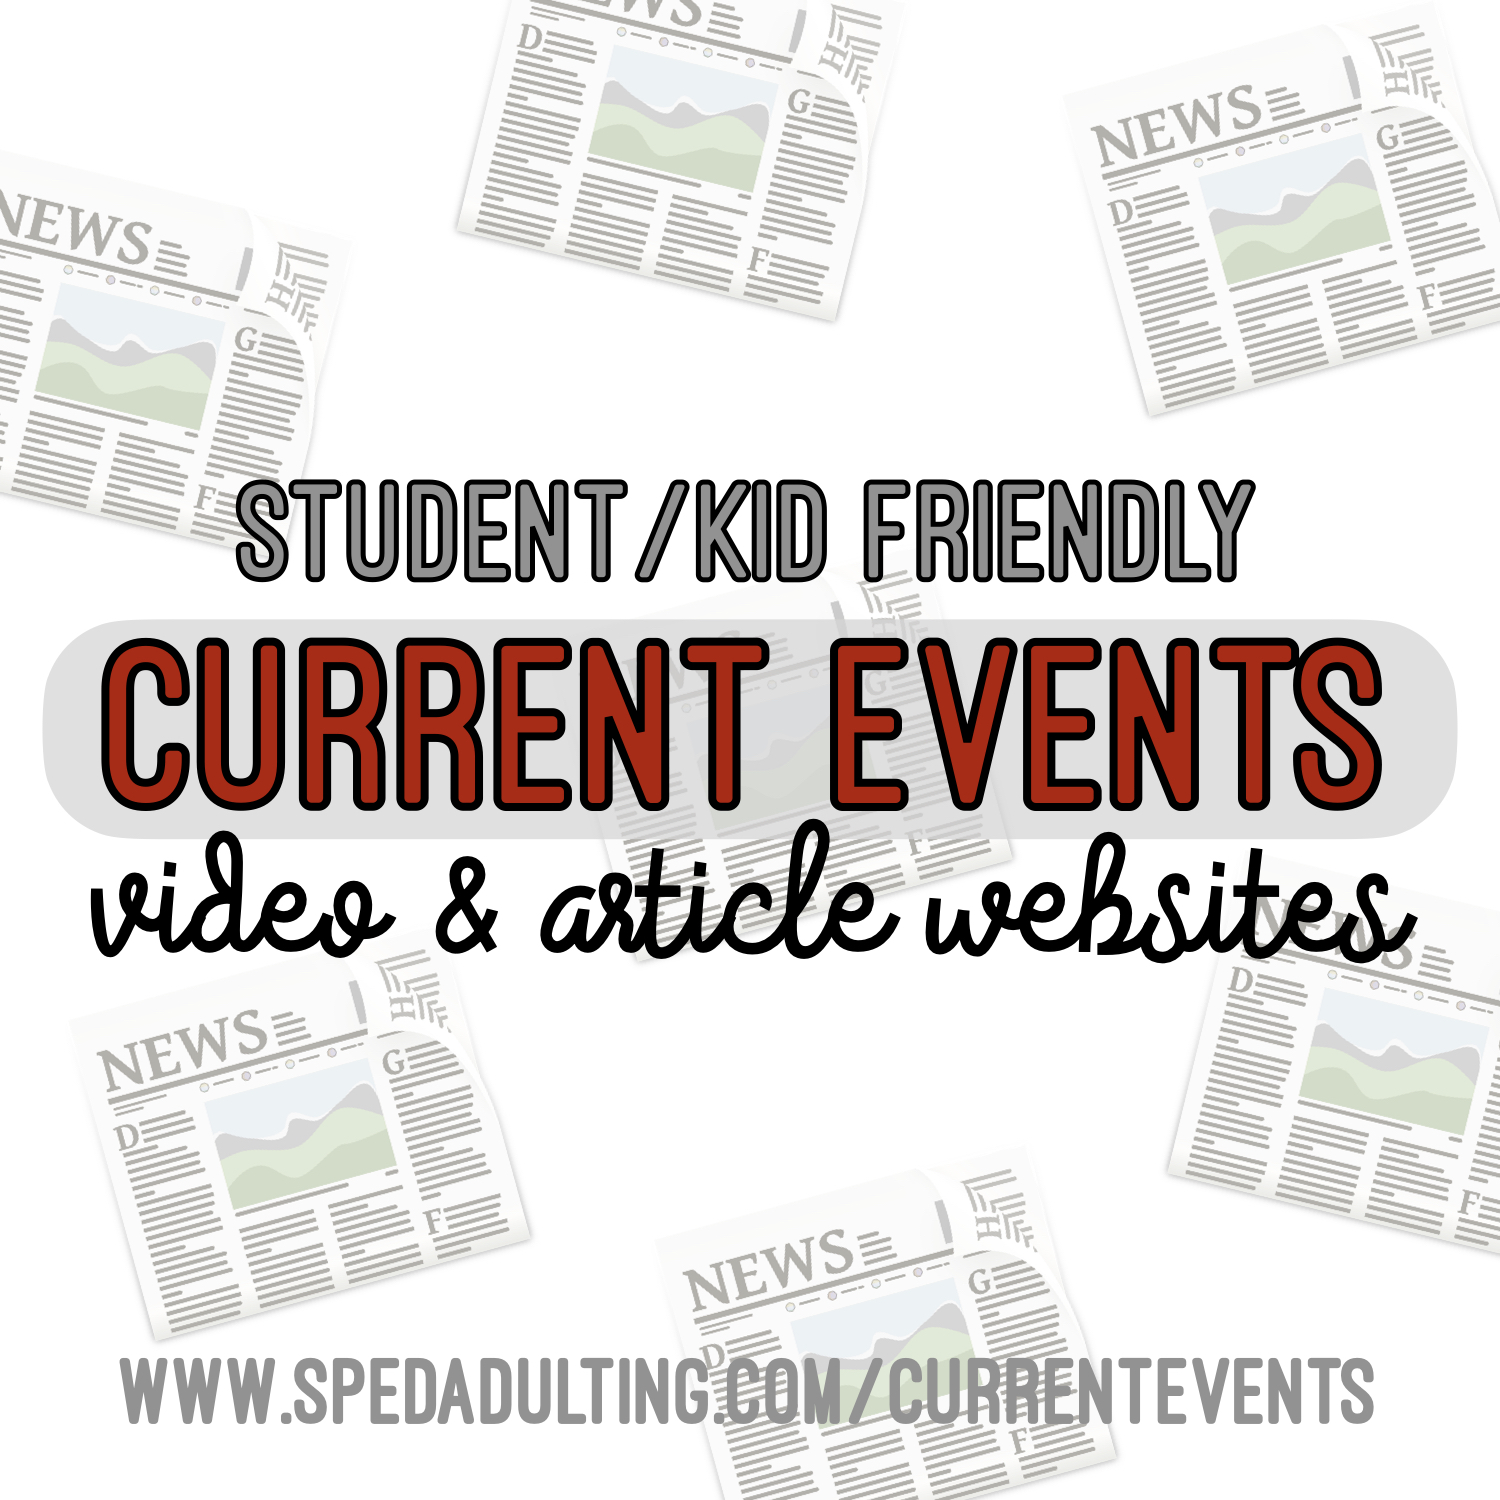 Current events video & article websites